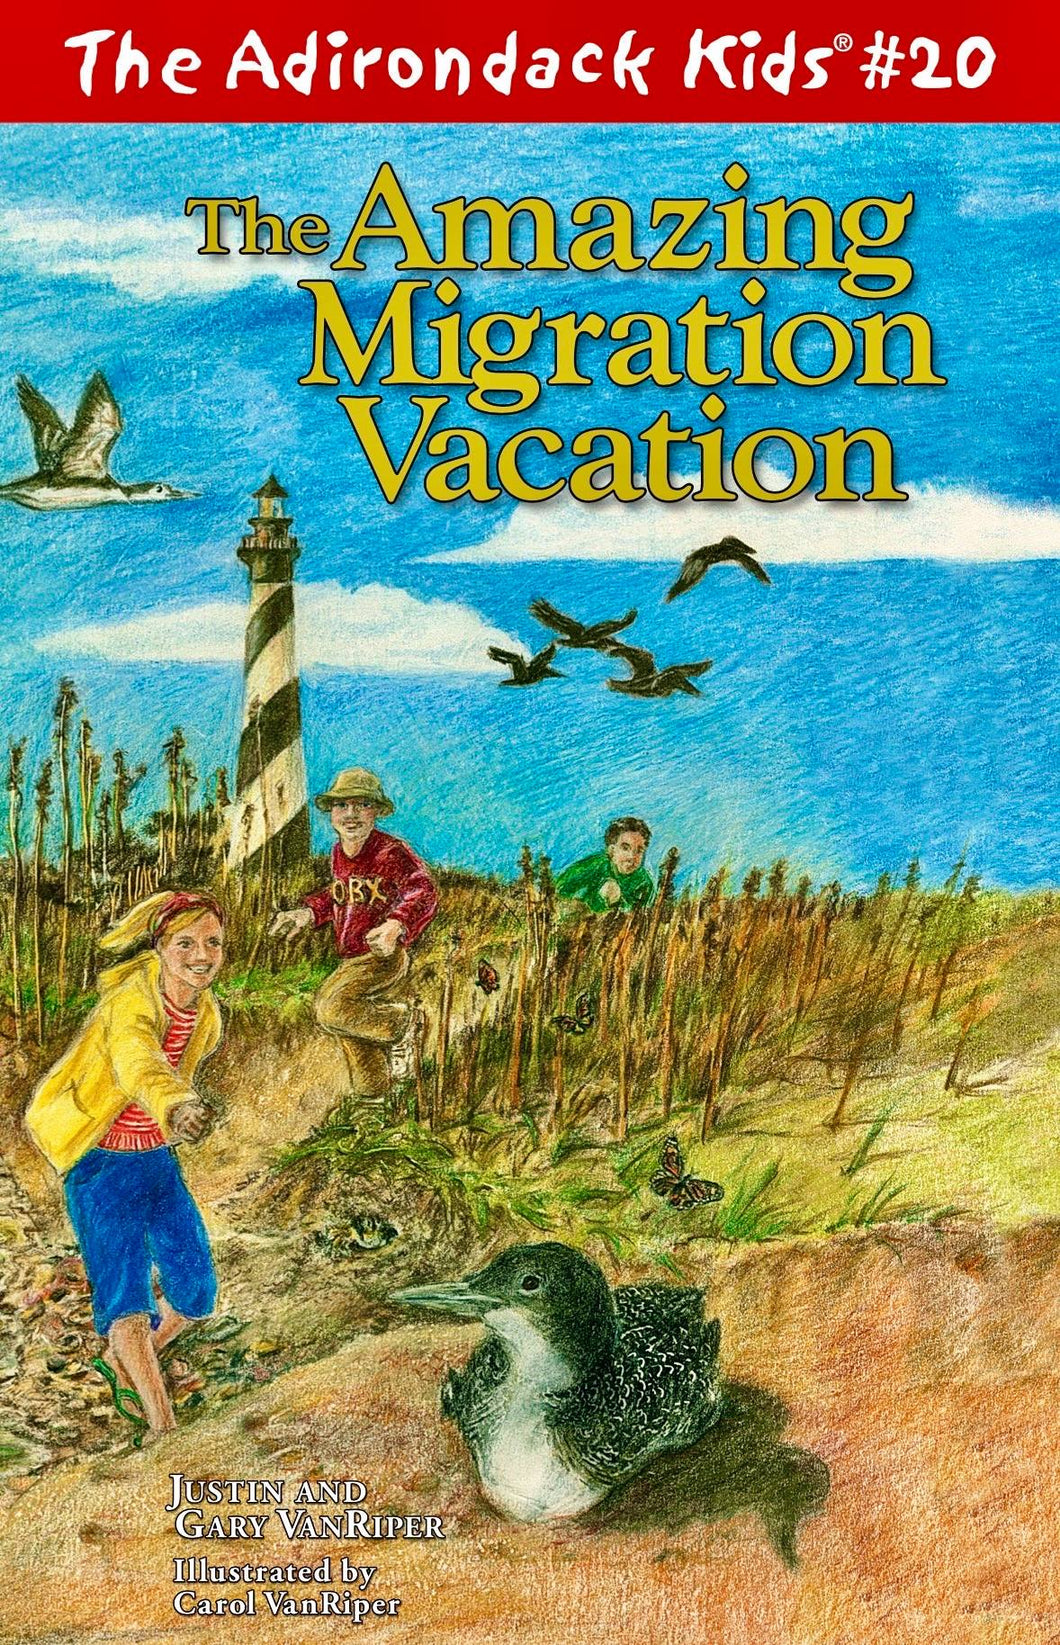 The Adirondack Kids® #20: The Amazing Migration Vacation